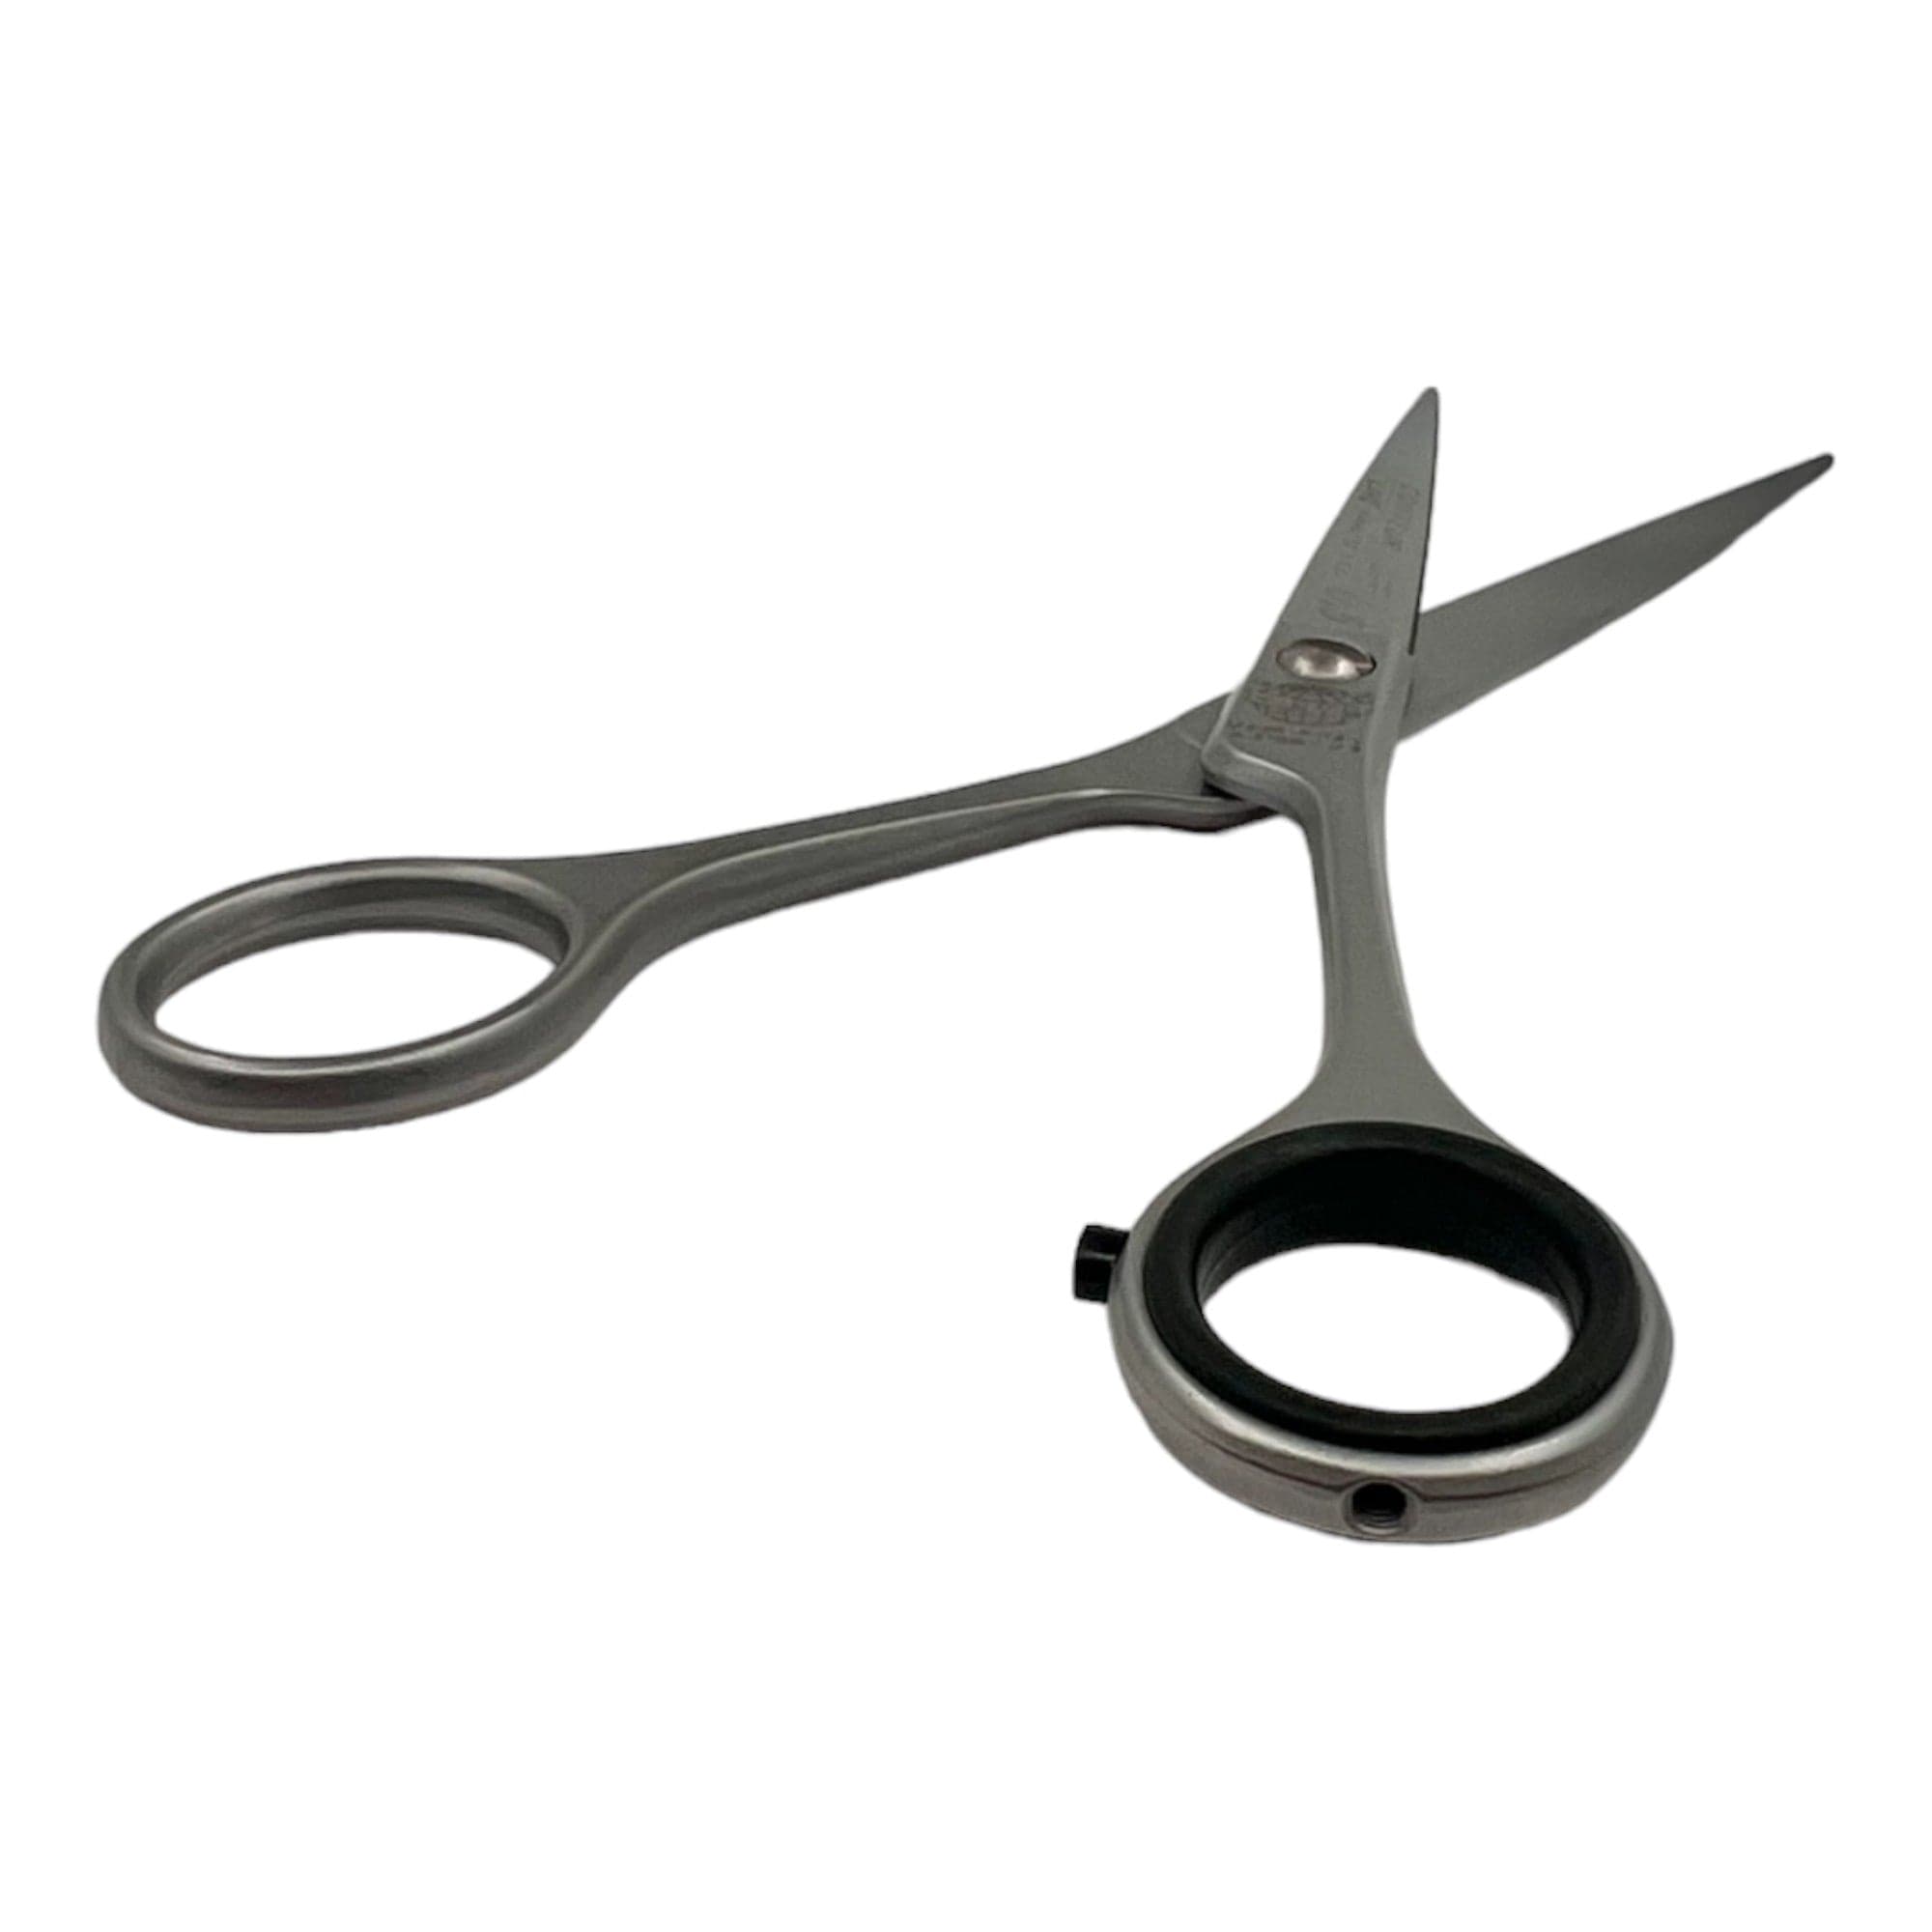 Kiepe - 277 Coiffeur Super Scissor 6 Inch (16cm)